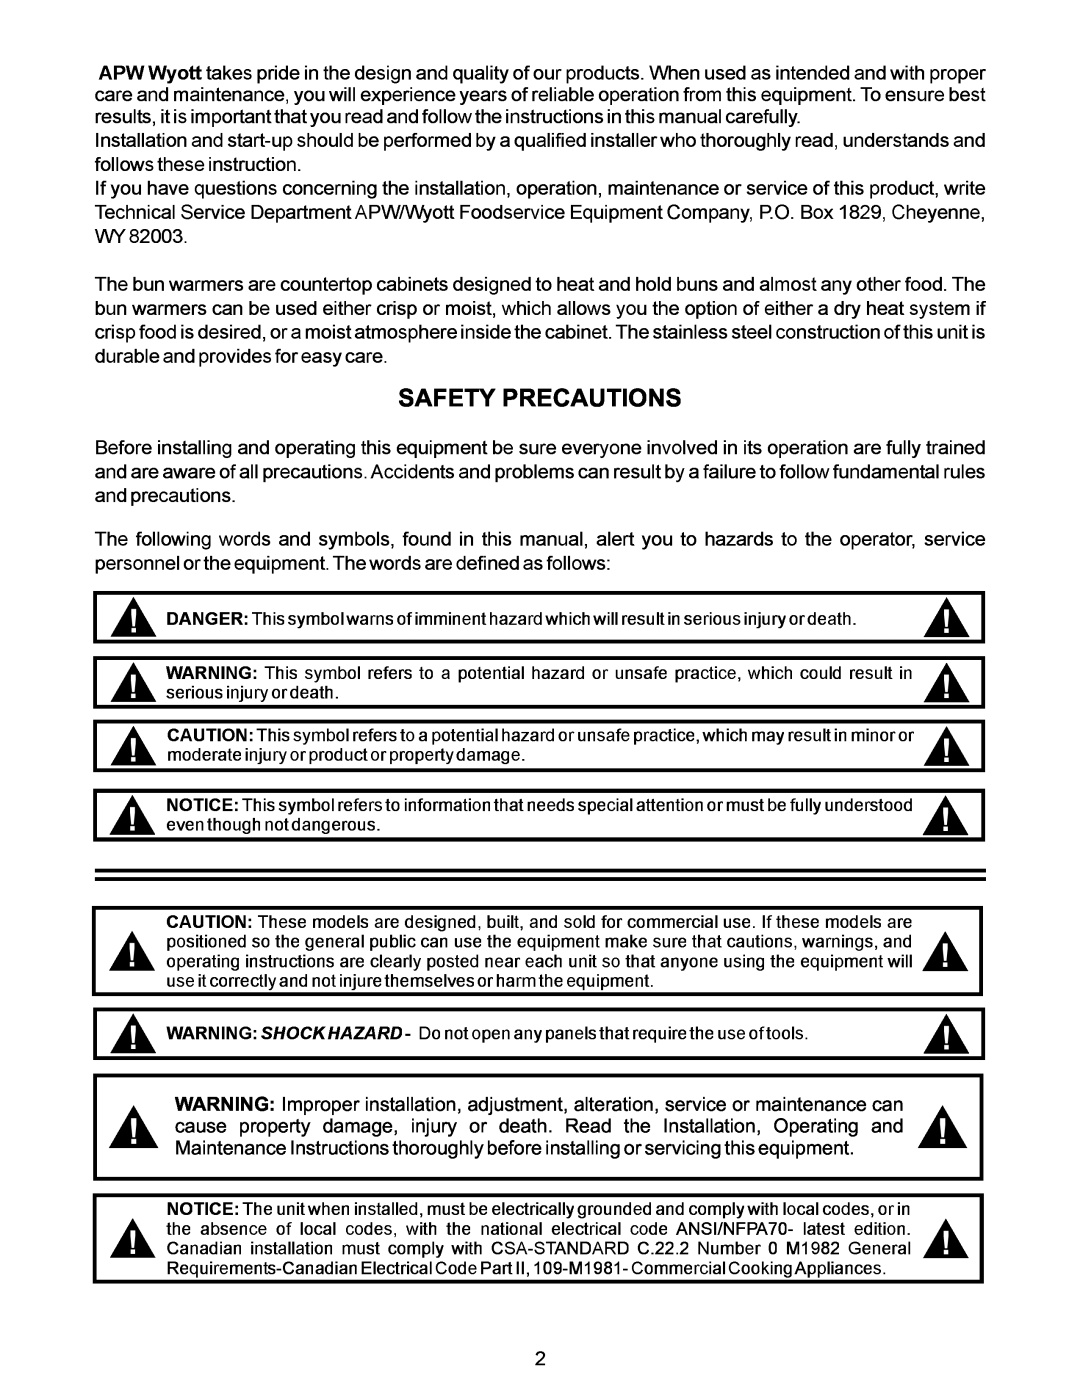 APW Wyott BW-30 operating instructions Safety Precautions, WARNING Improper 